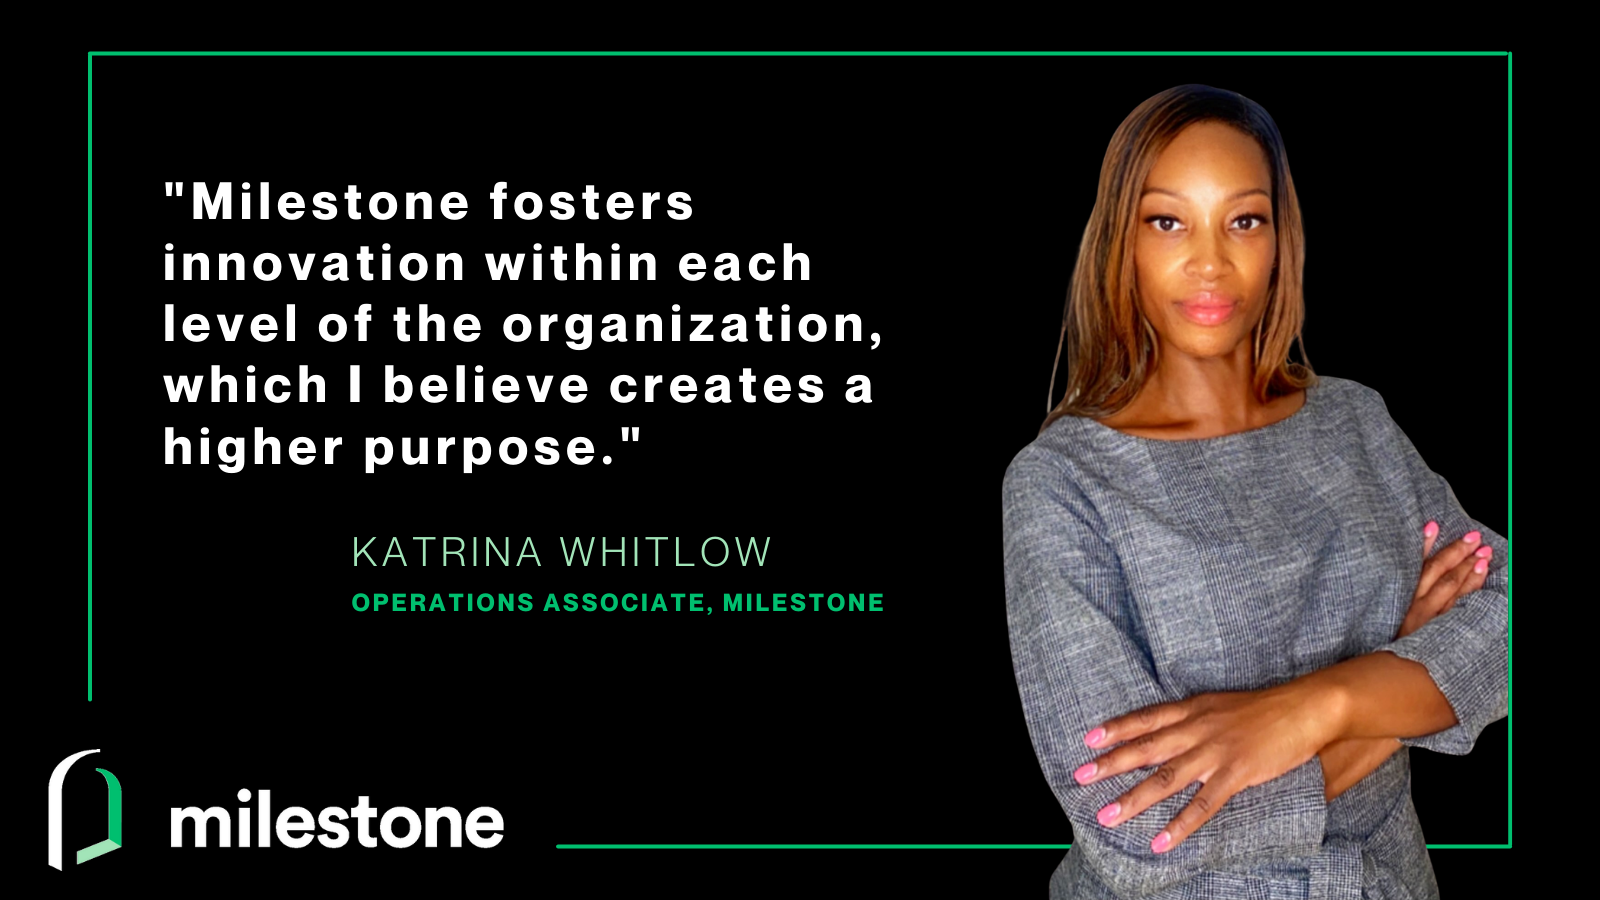 Introducing Katrina Whitlow​, Milestone’s Operations Associate!